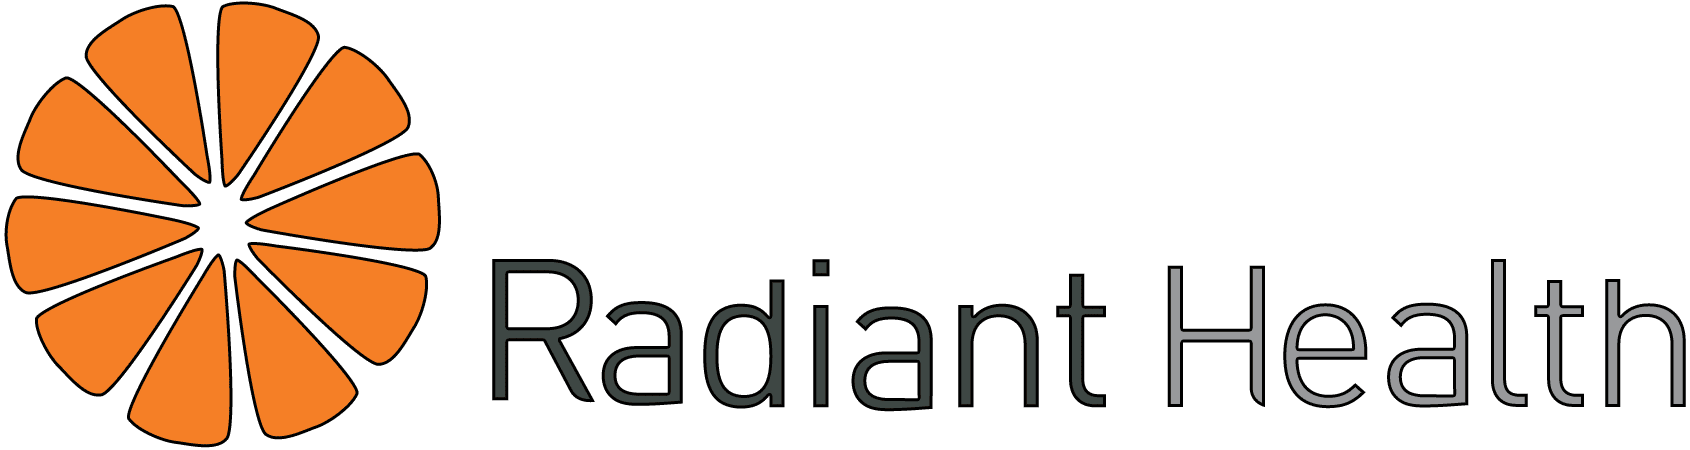 Radiant Health Websites